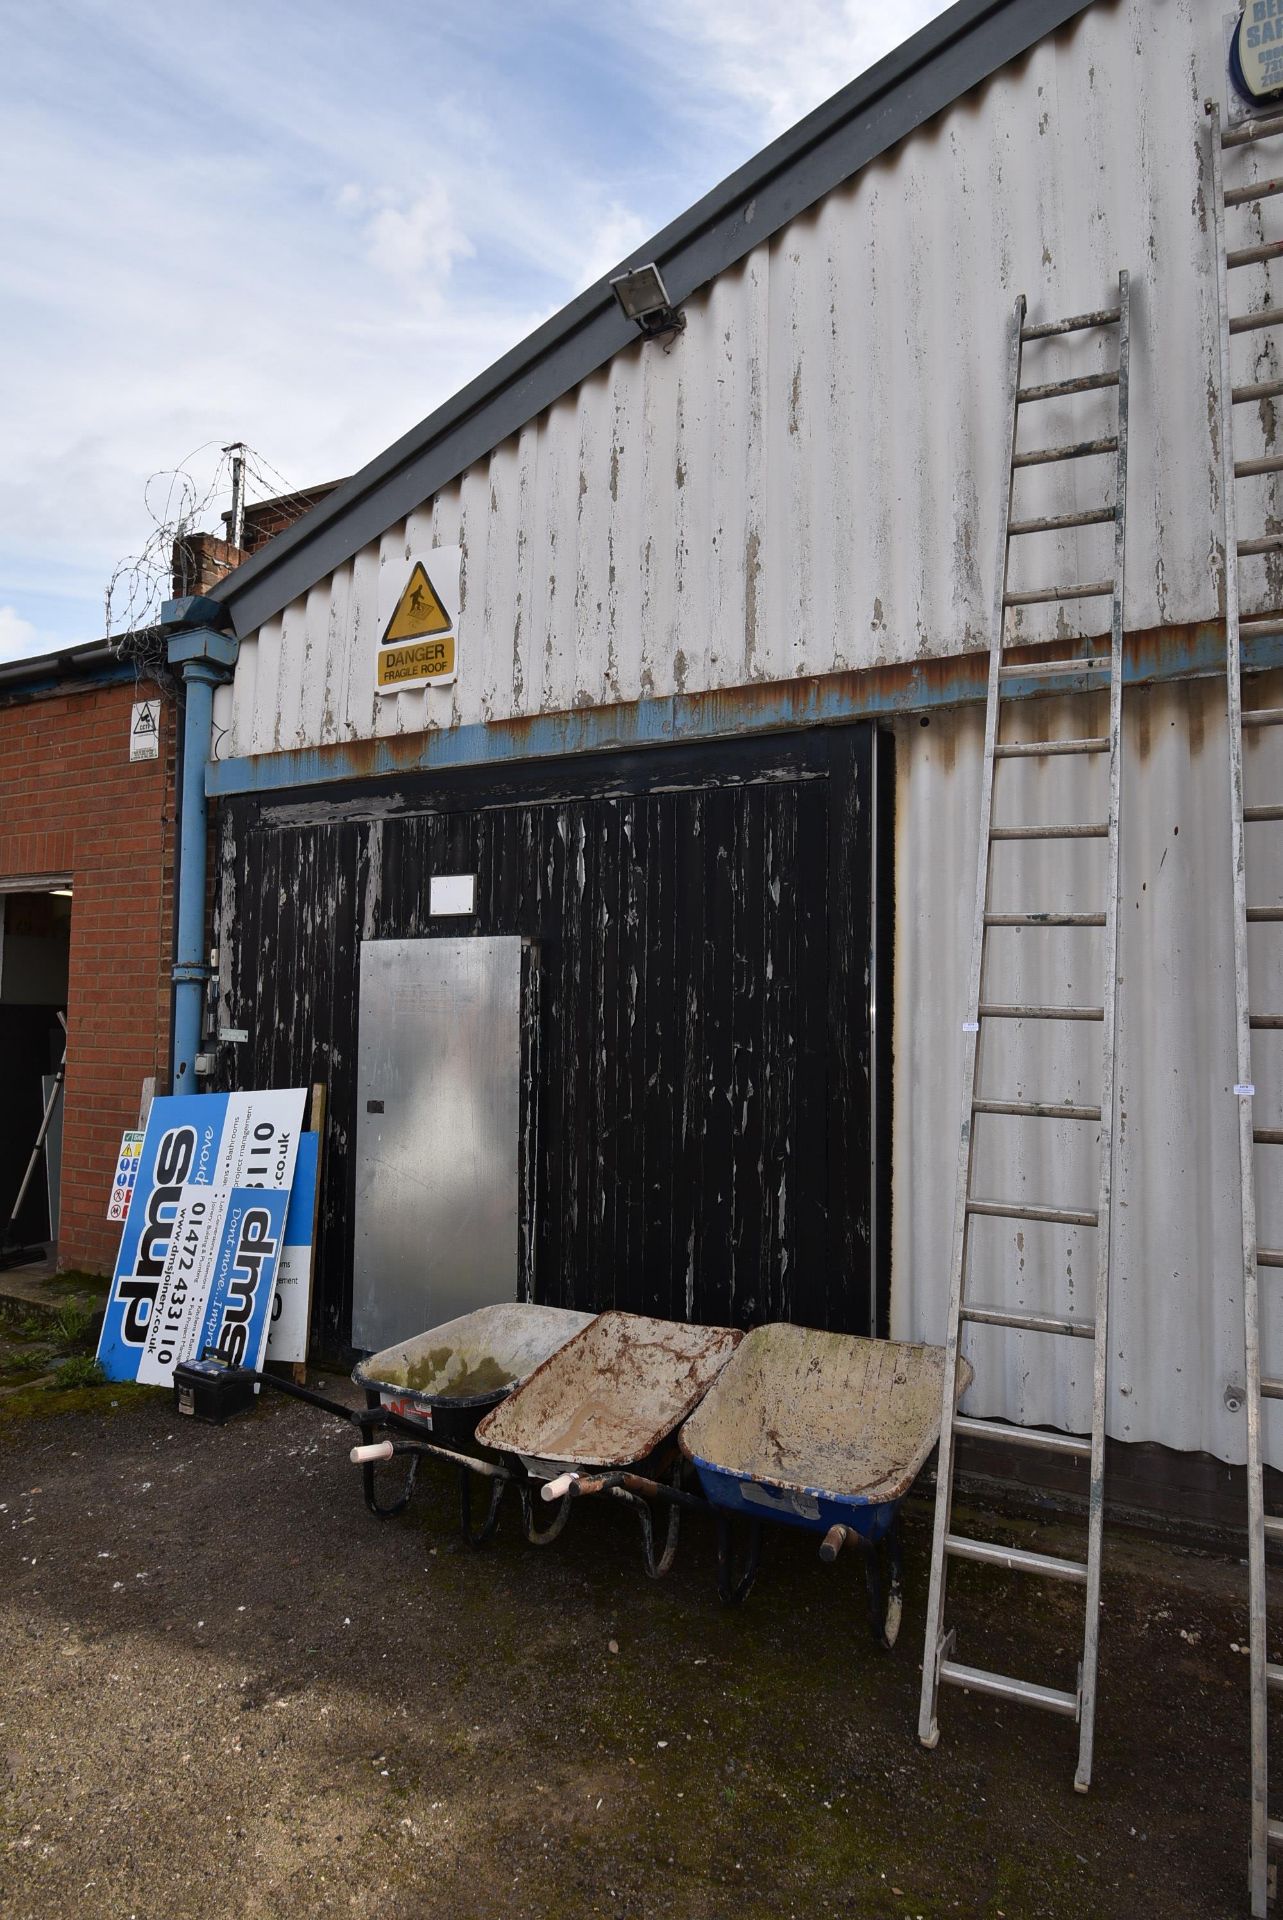 *Aluminium 16 Rung Ladder (Location: 64 King Edward St, Grimsby, DN31 3JP, Viewing Tuesday 26th,